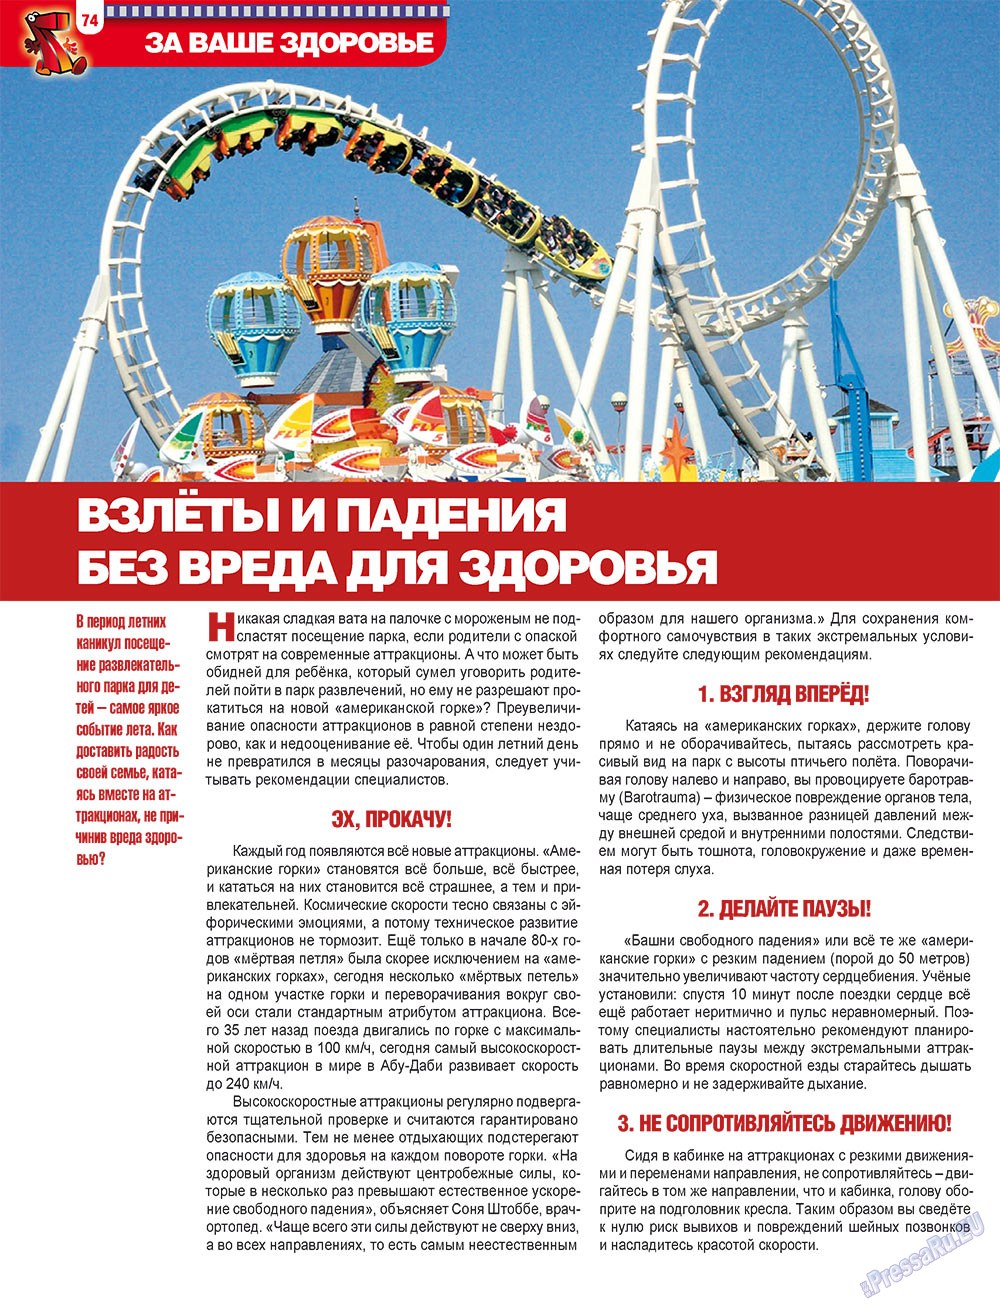 7плюс7я (журнал). 2011 год, номер 25, стр. 74